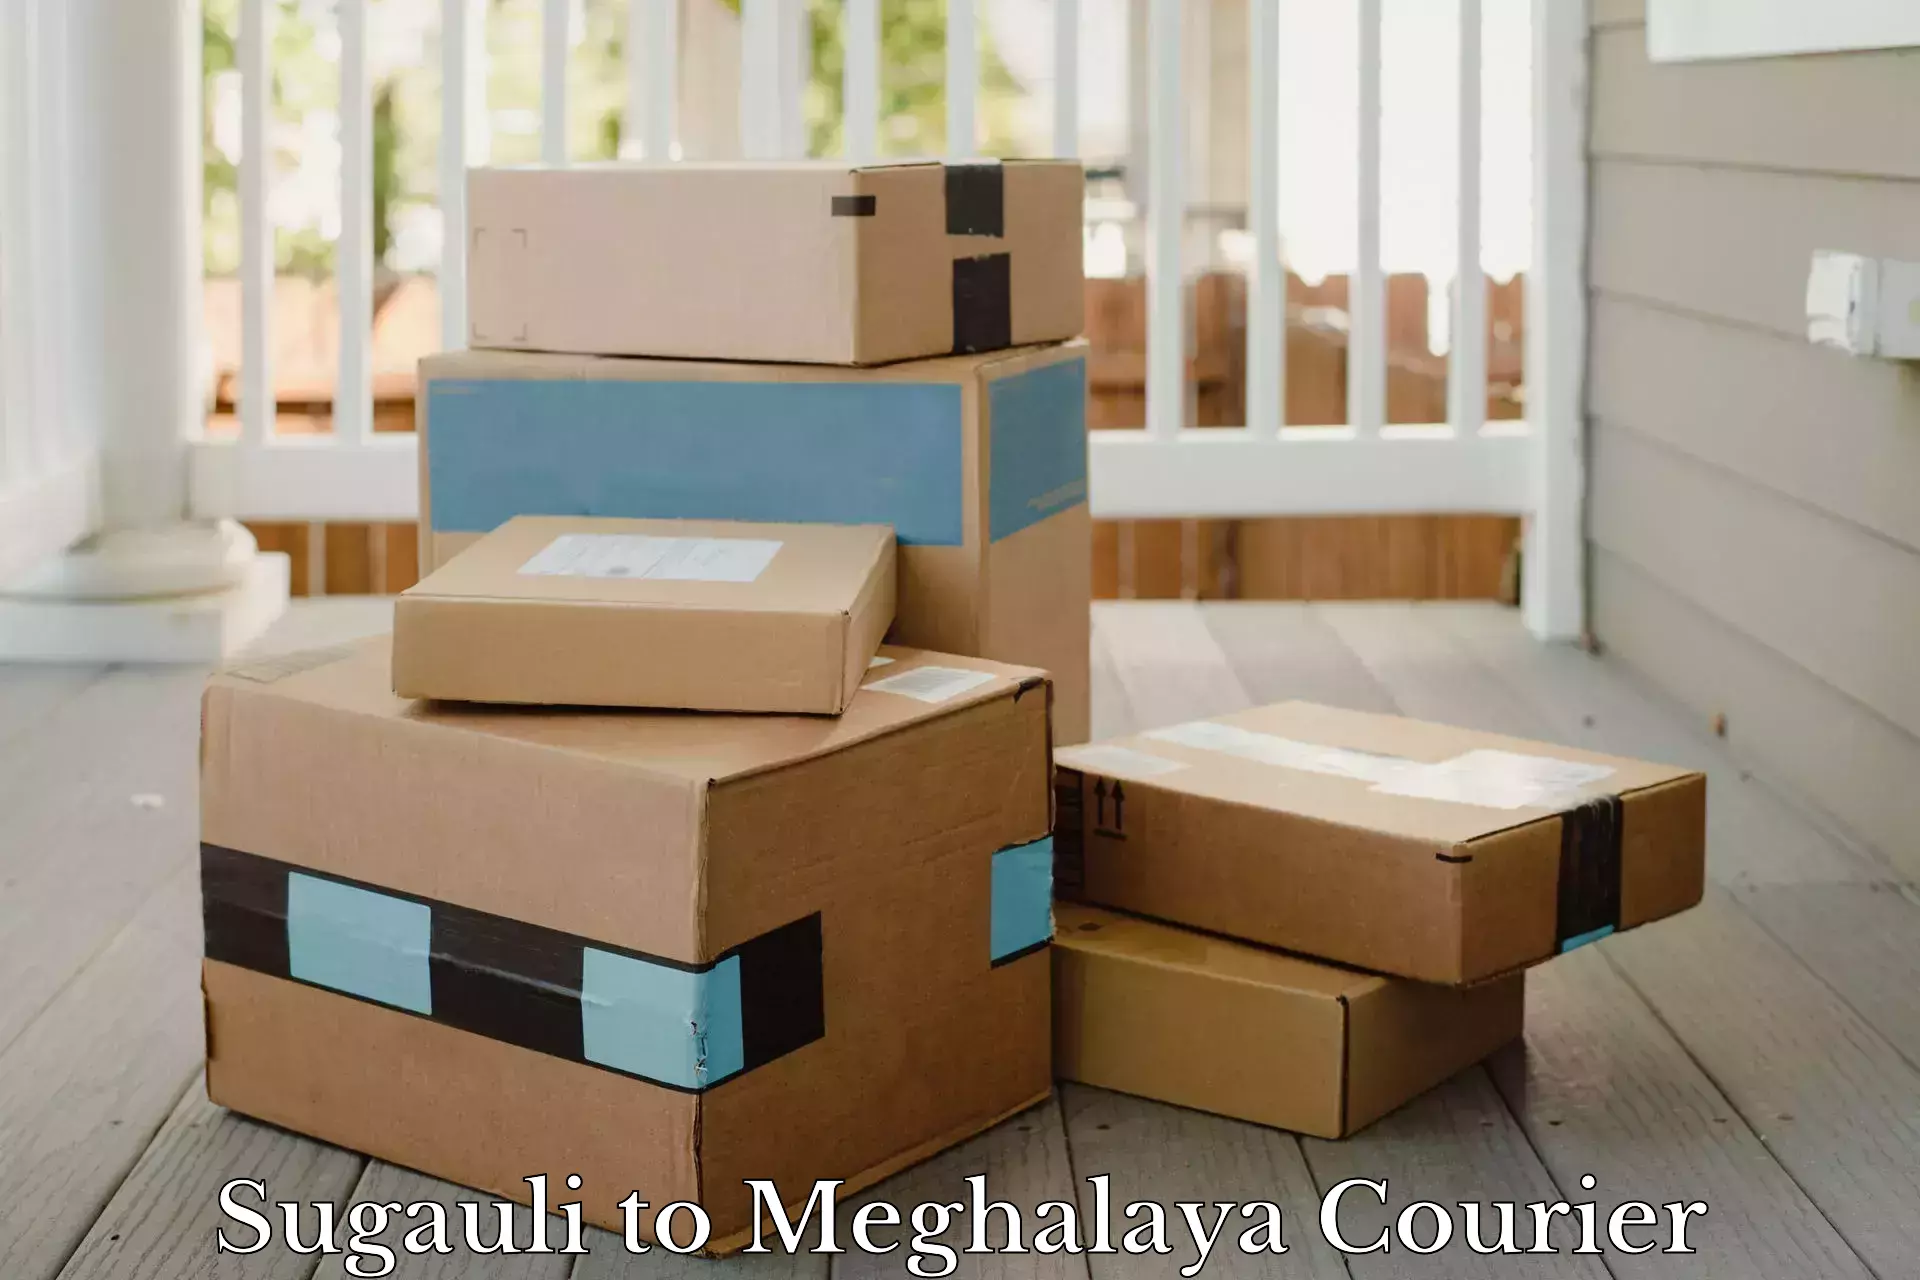 Courier service booking Sugauli to Meghalaya